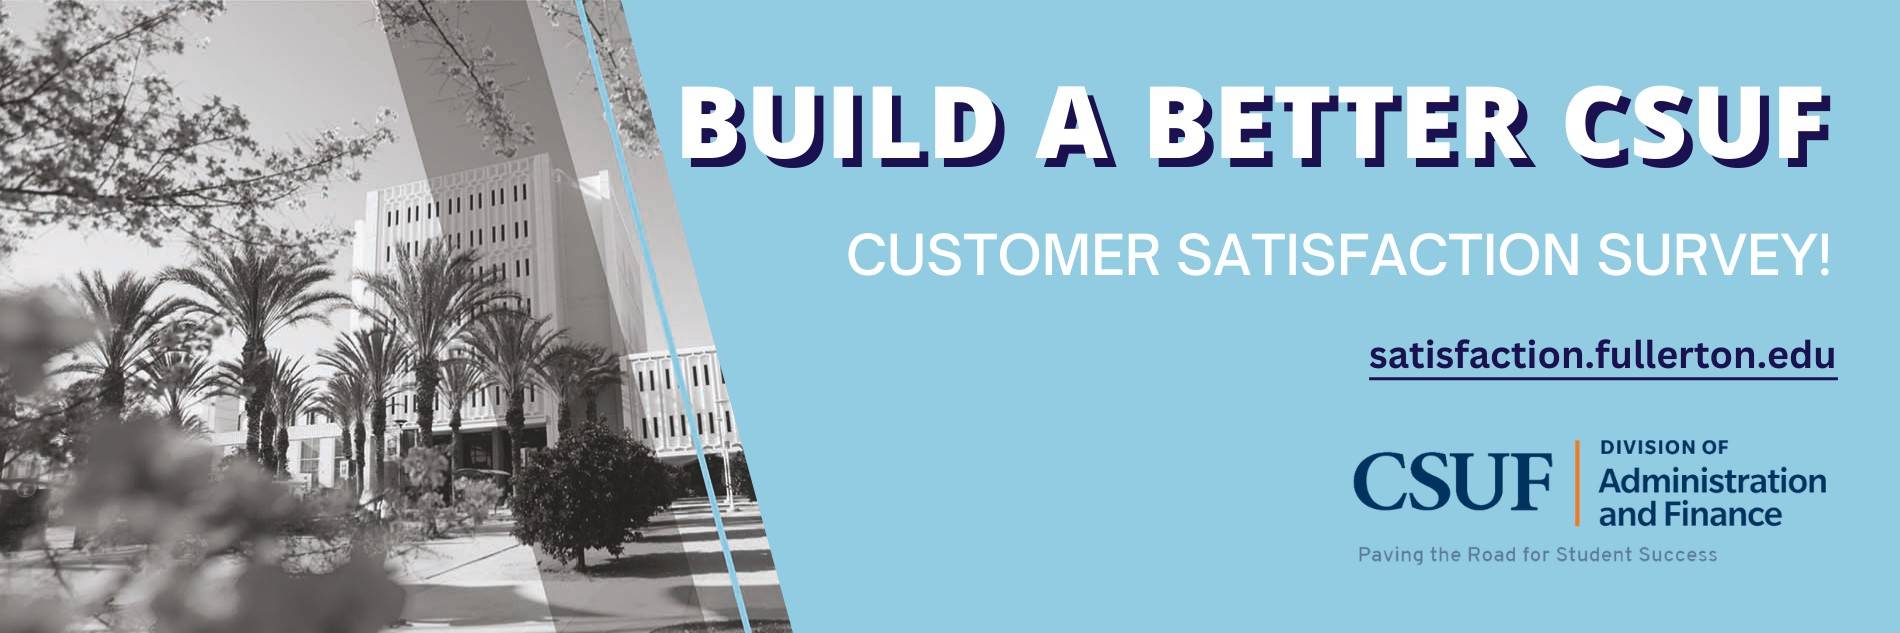 Build a Better CSUF 2021, Customer Satisfaction Survey